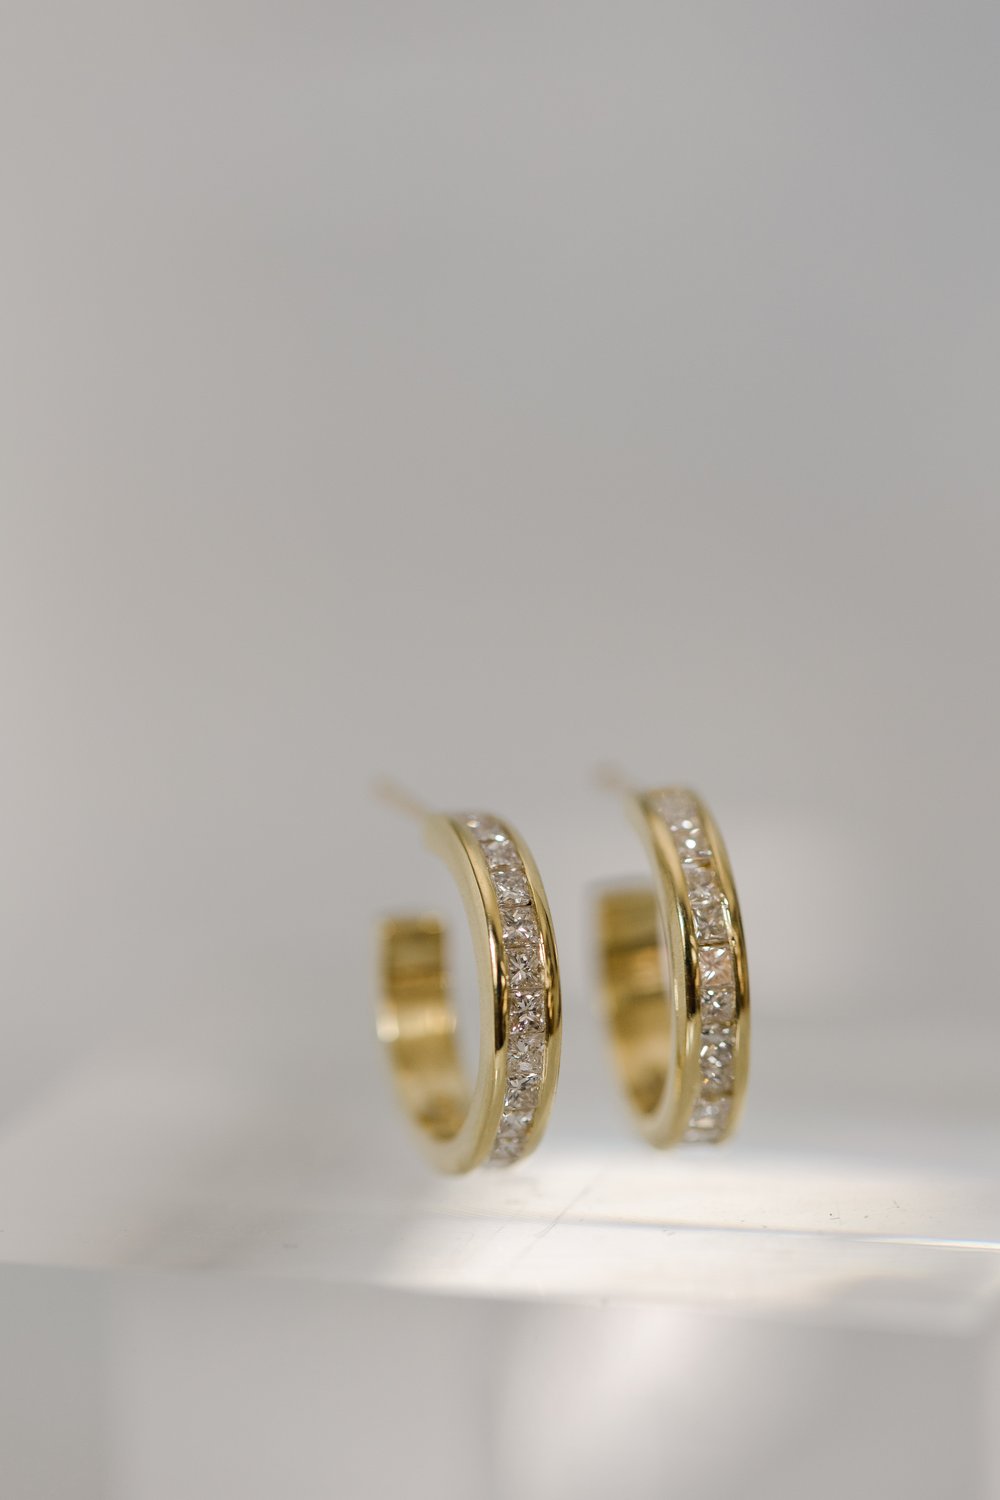 Alx&amp;Co. custom designed diamond and yellow gold earrings